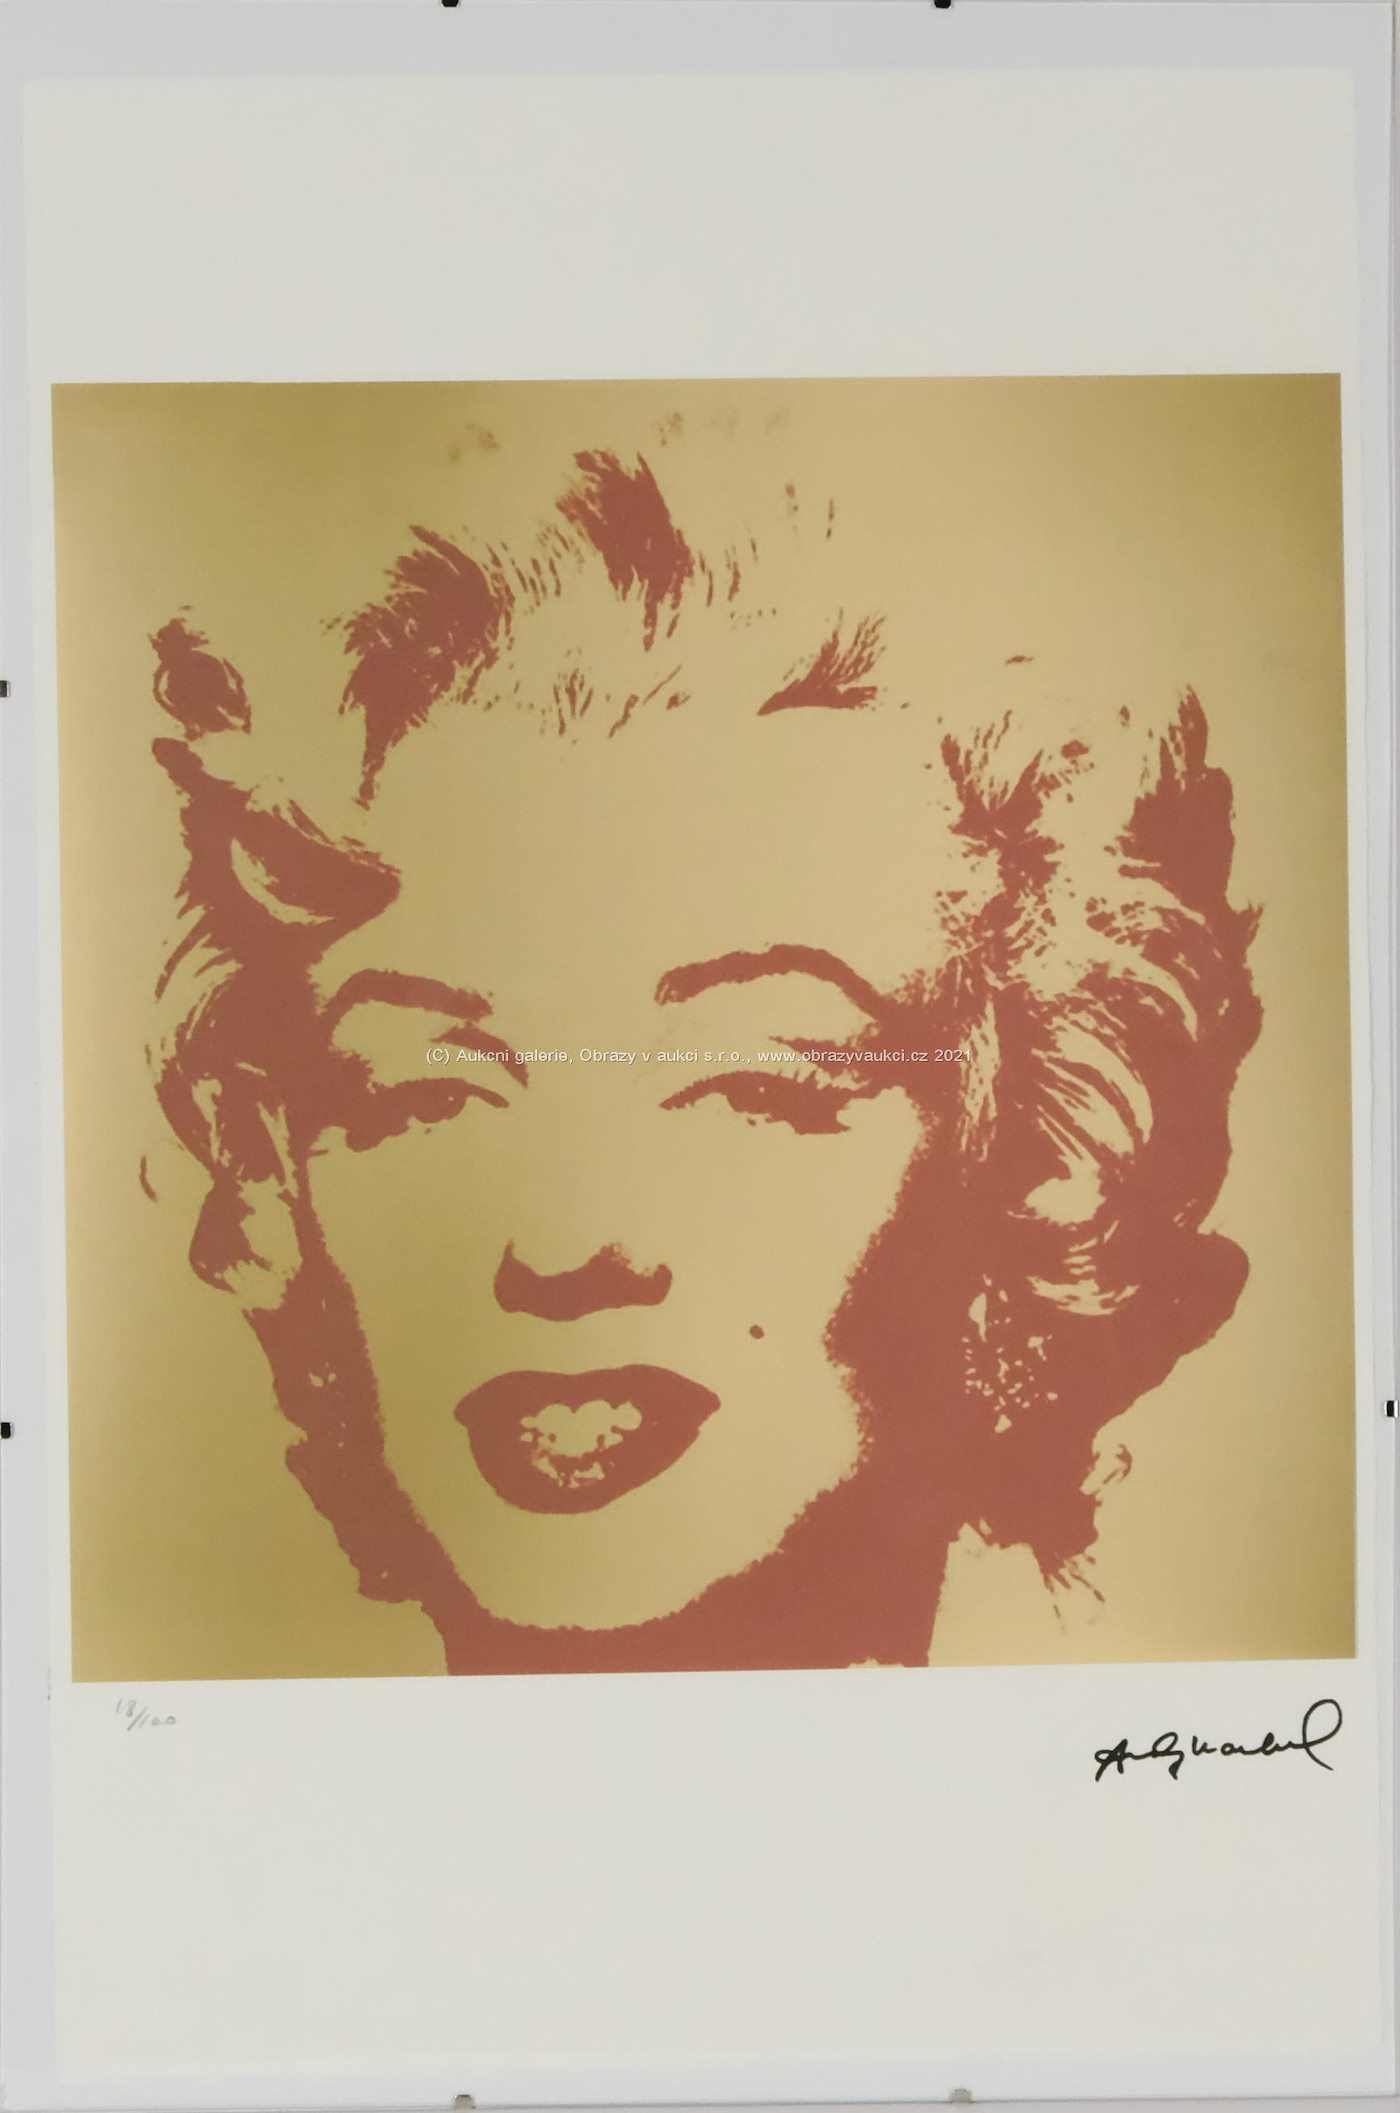 Andy Warhol - Marylin